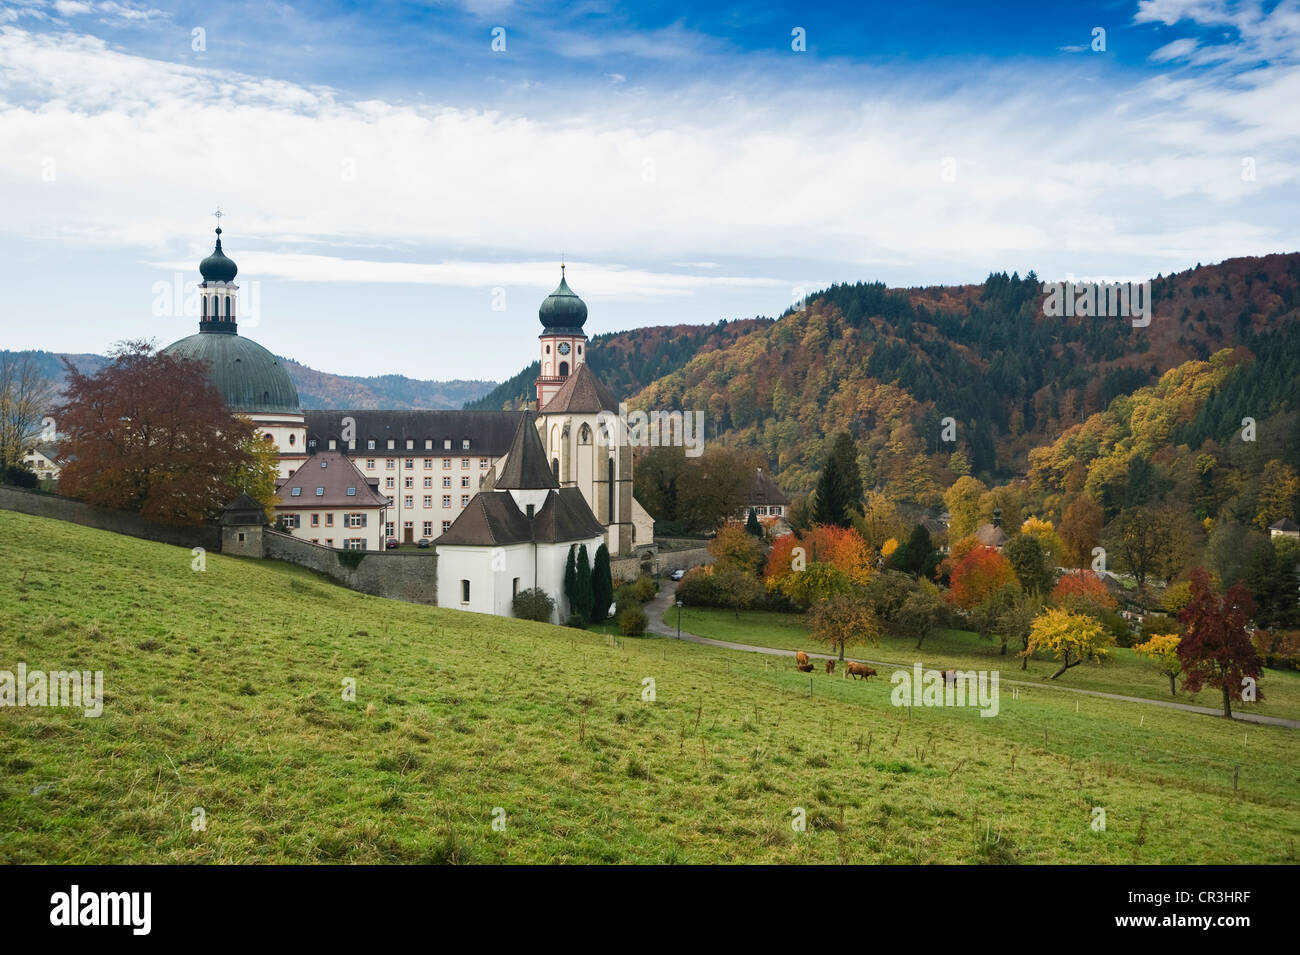 St Trudpert monastery, Muenstertal, Schwarzwald or Black Forest, Baden-Wuerttemberg, Germany, Europe Stock Photo